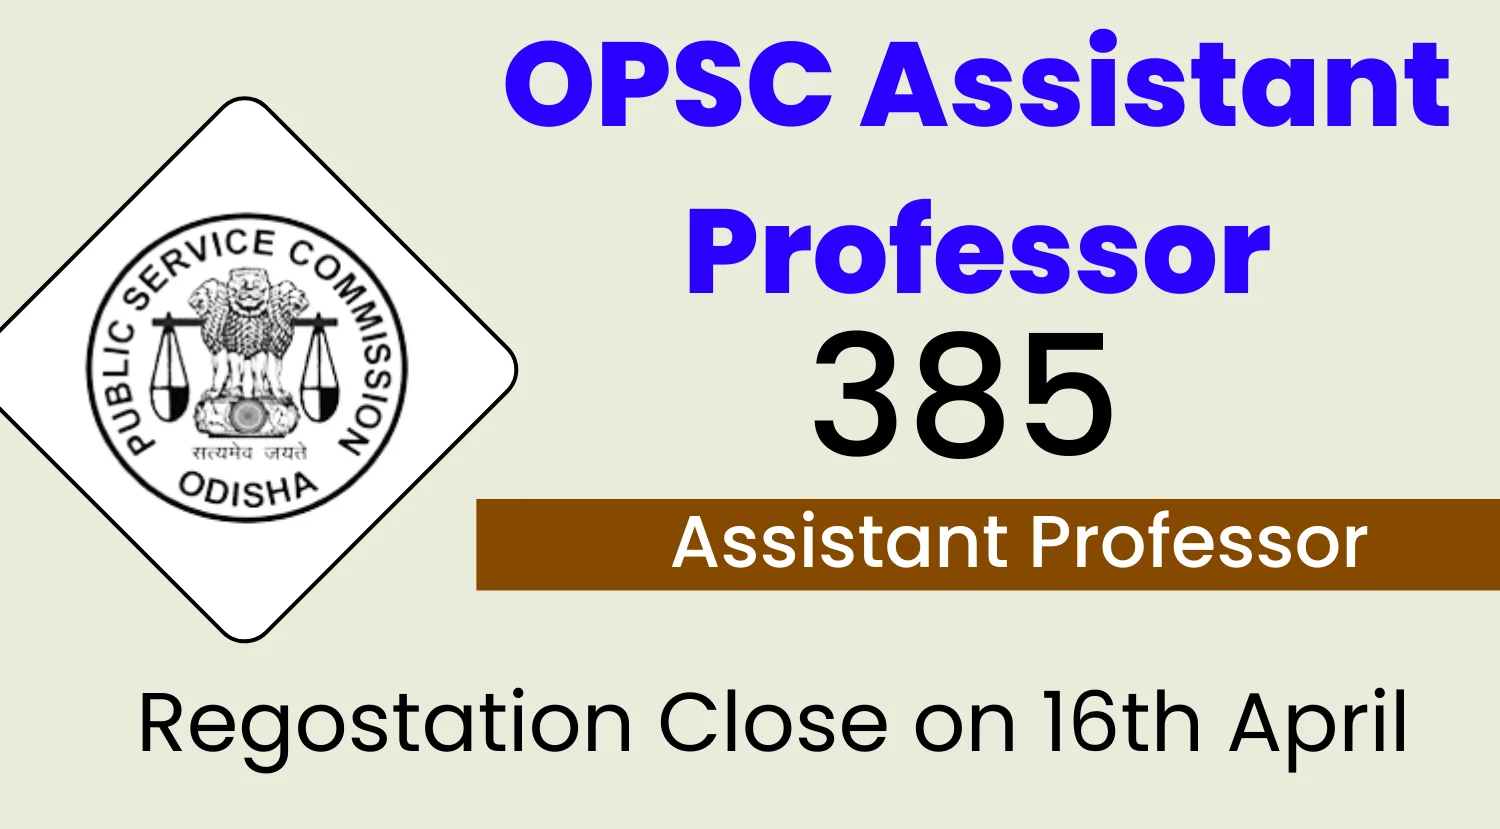 OPSC Assistant Professor